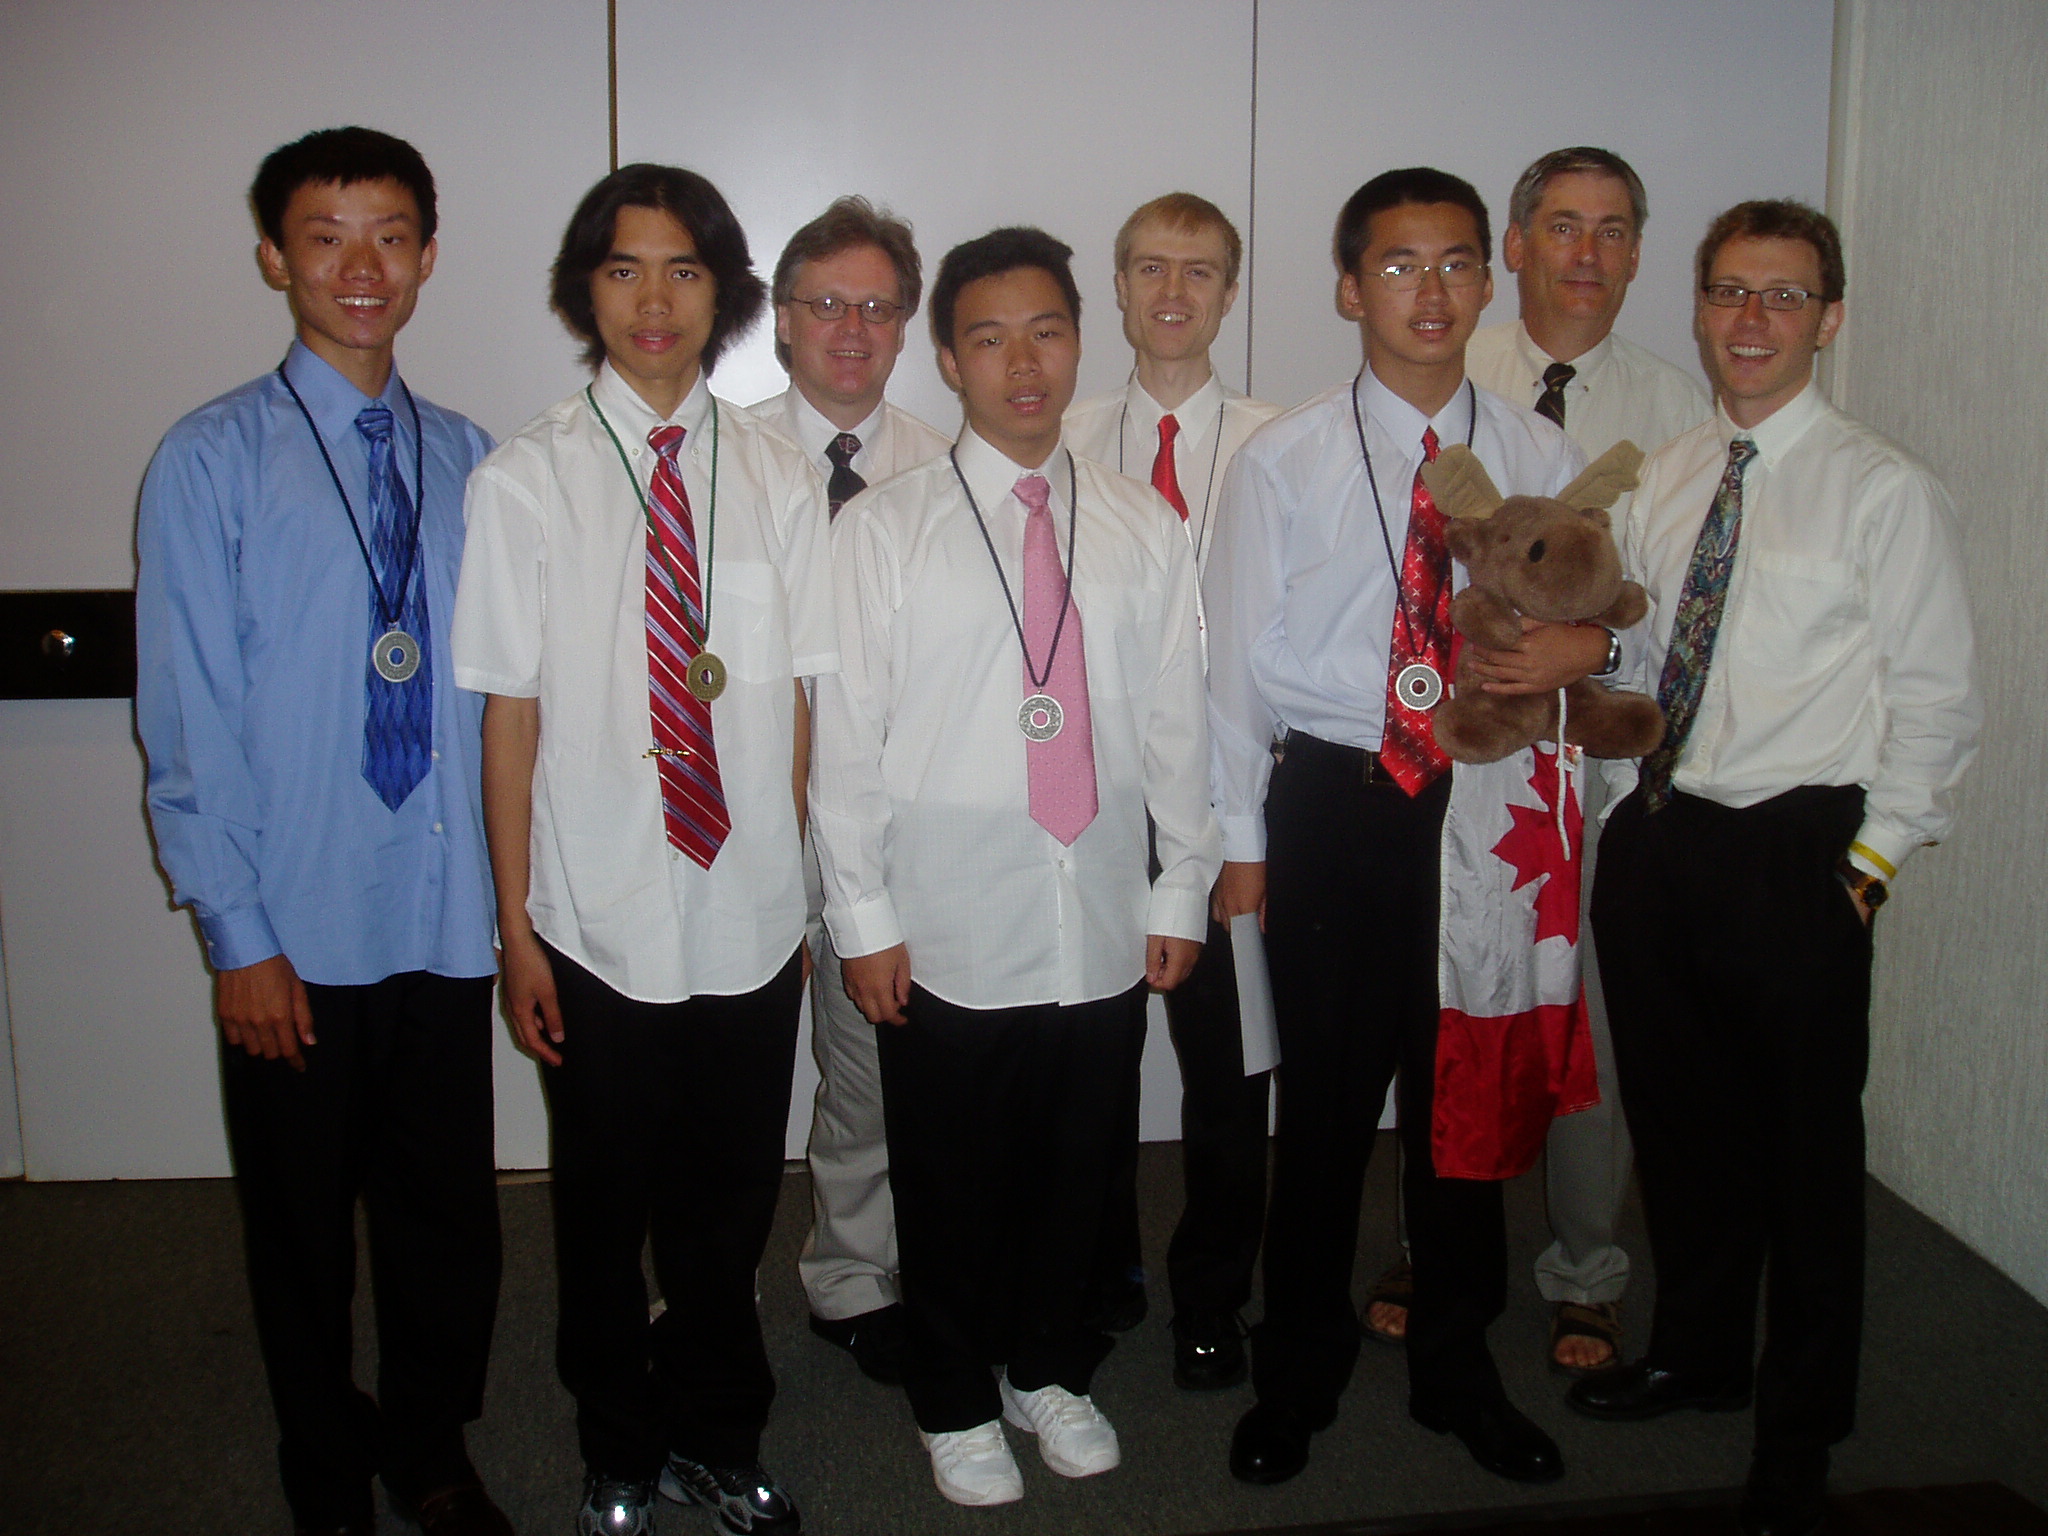 2006 IOI Team